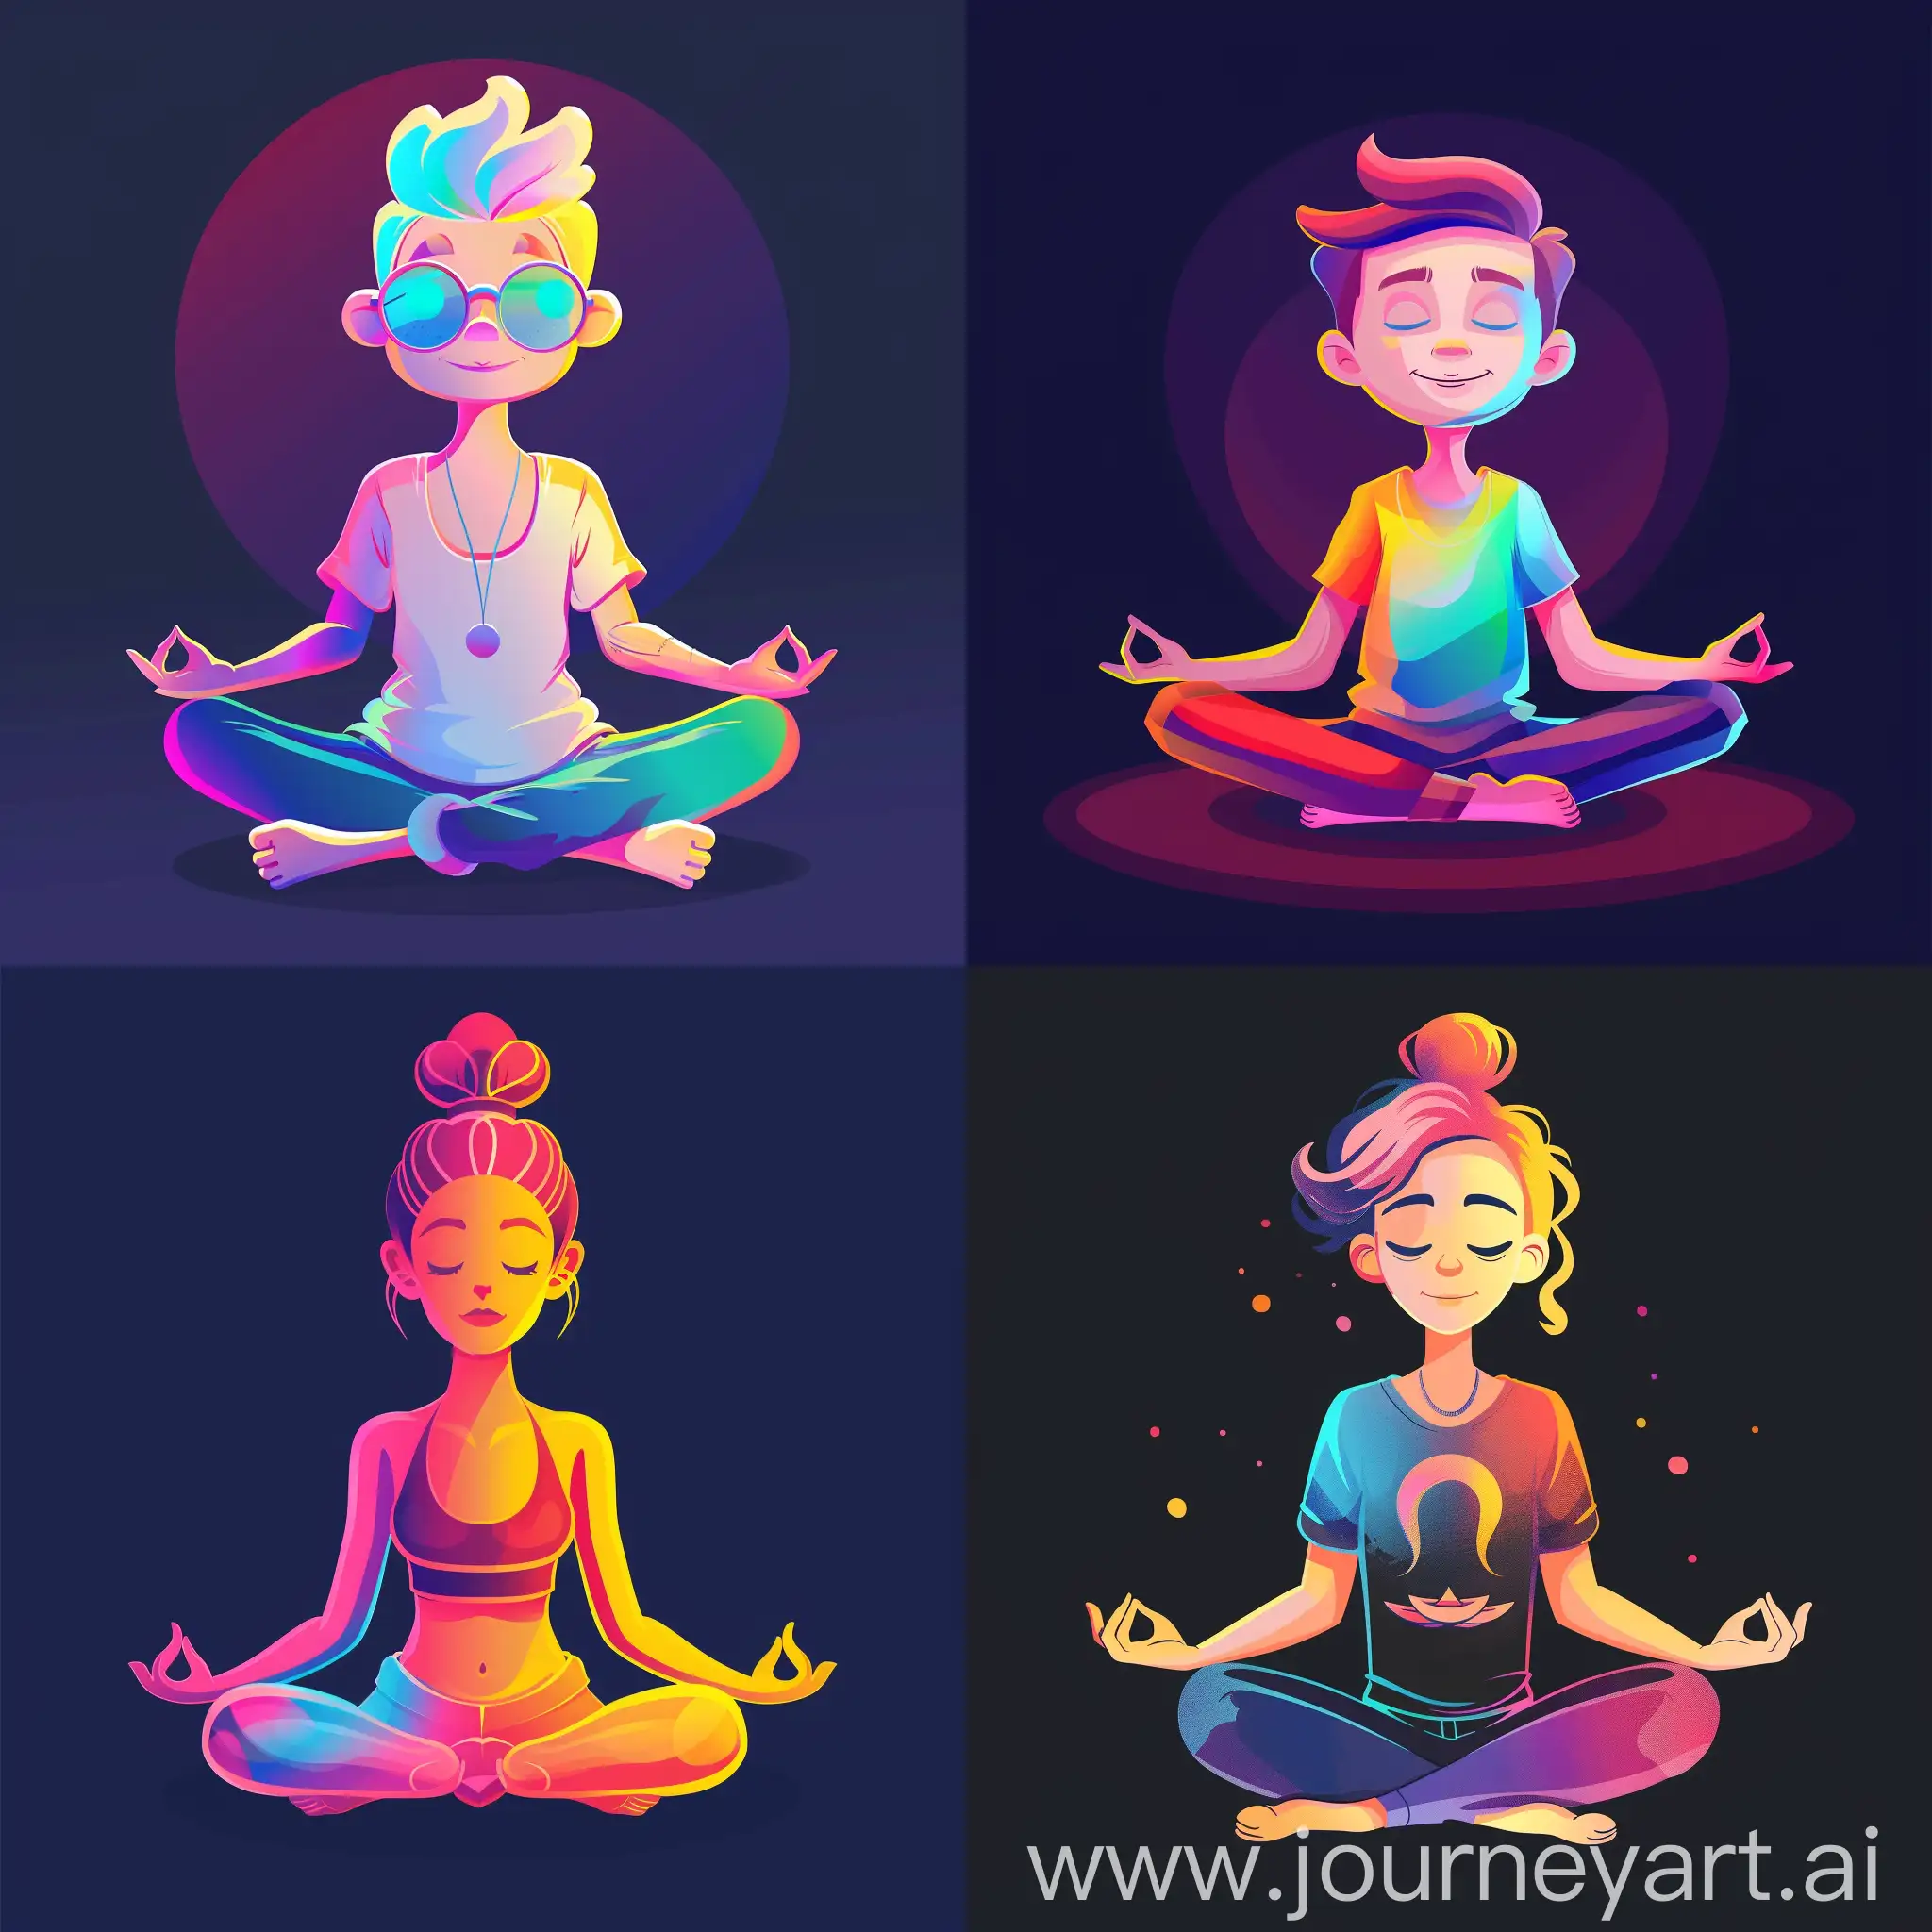 Cartoon-Blogger-in-Vibrant-Meditative-Pose-on-Stylish-Monochromatic-Background